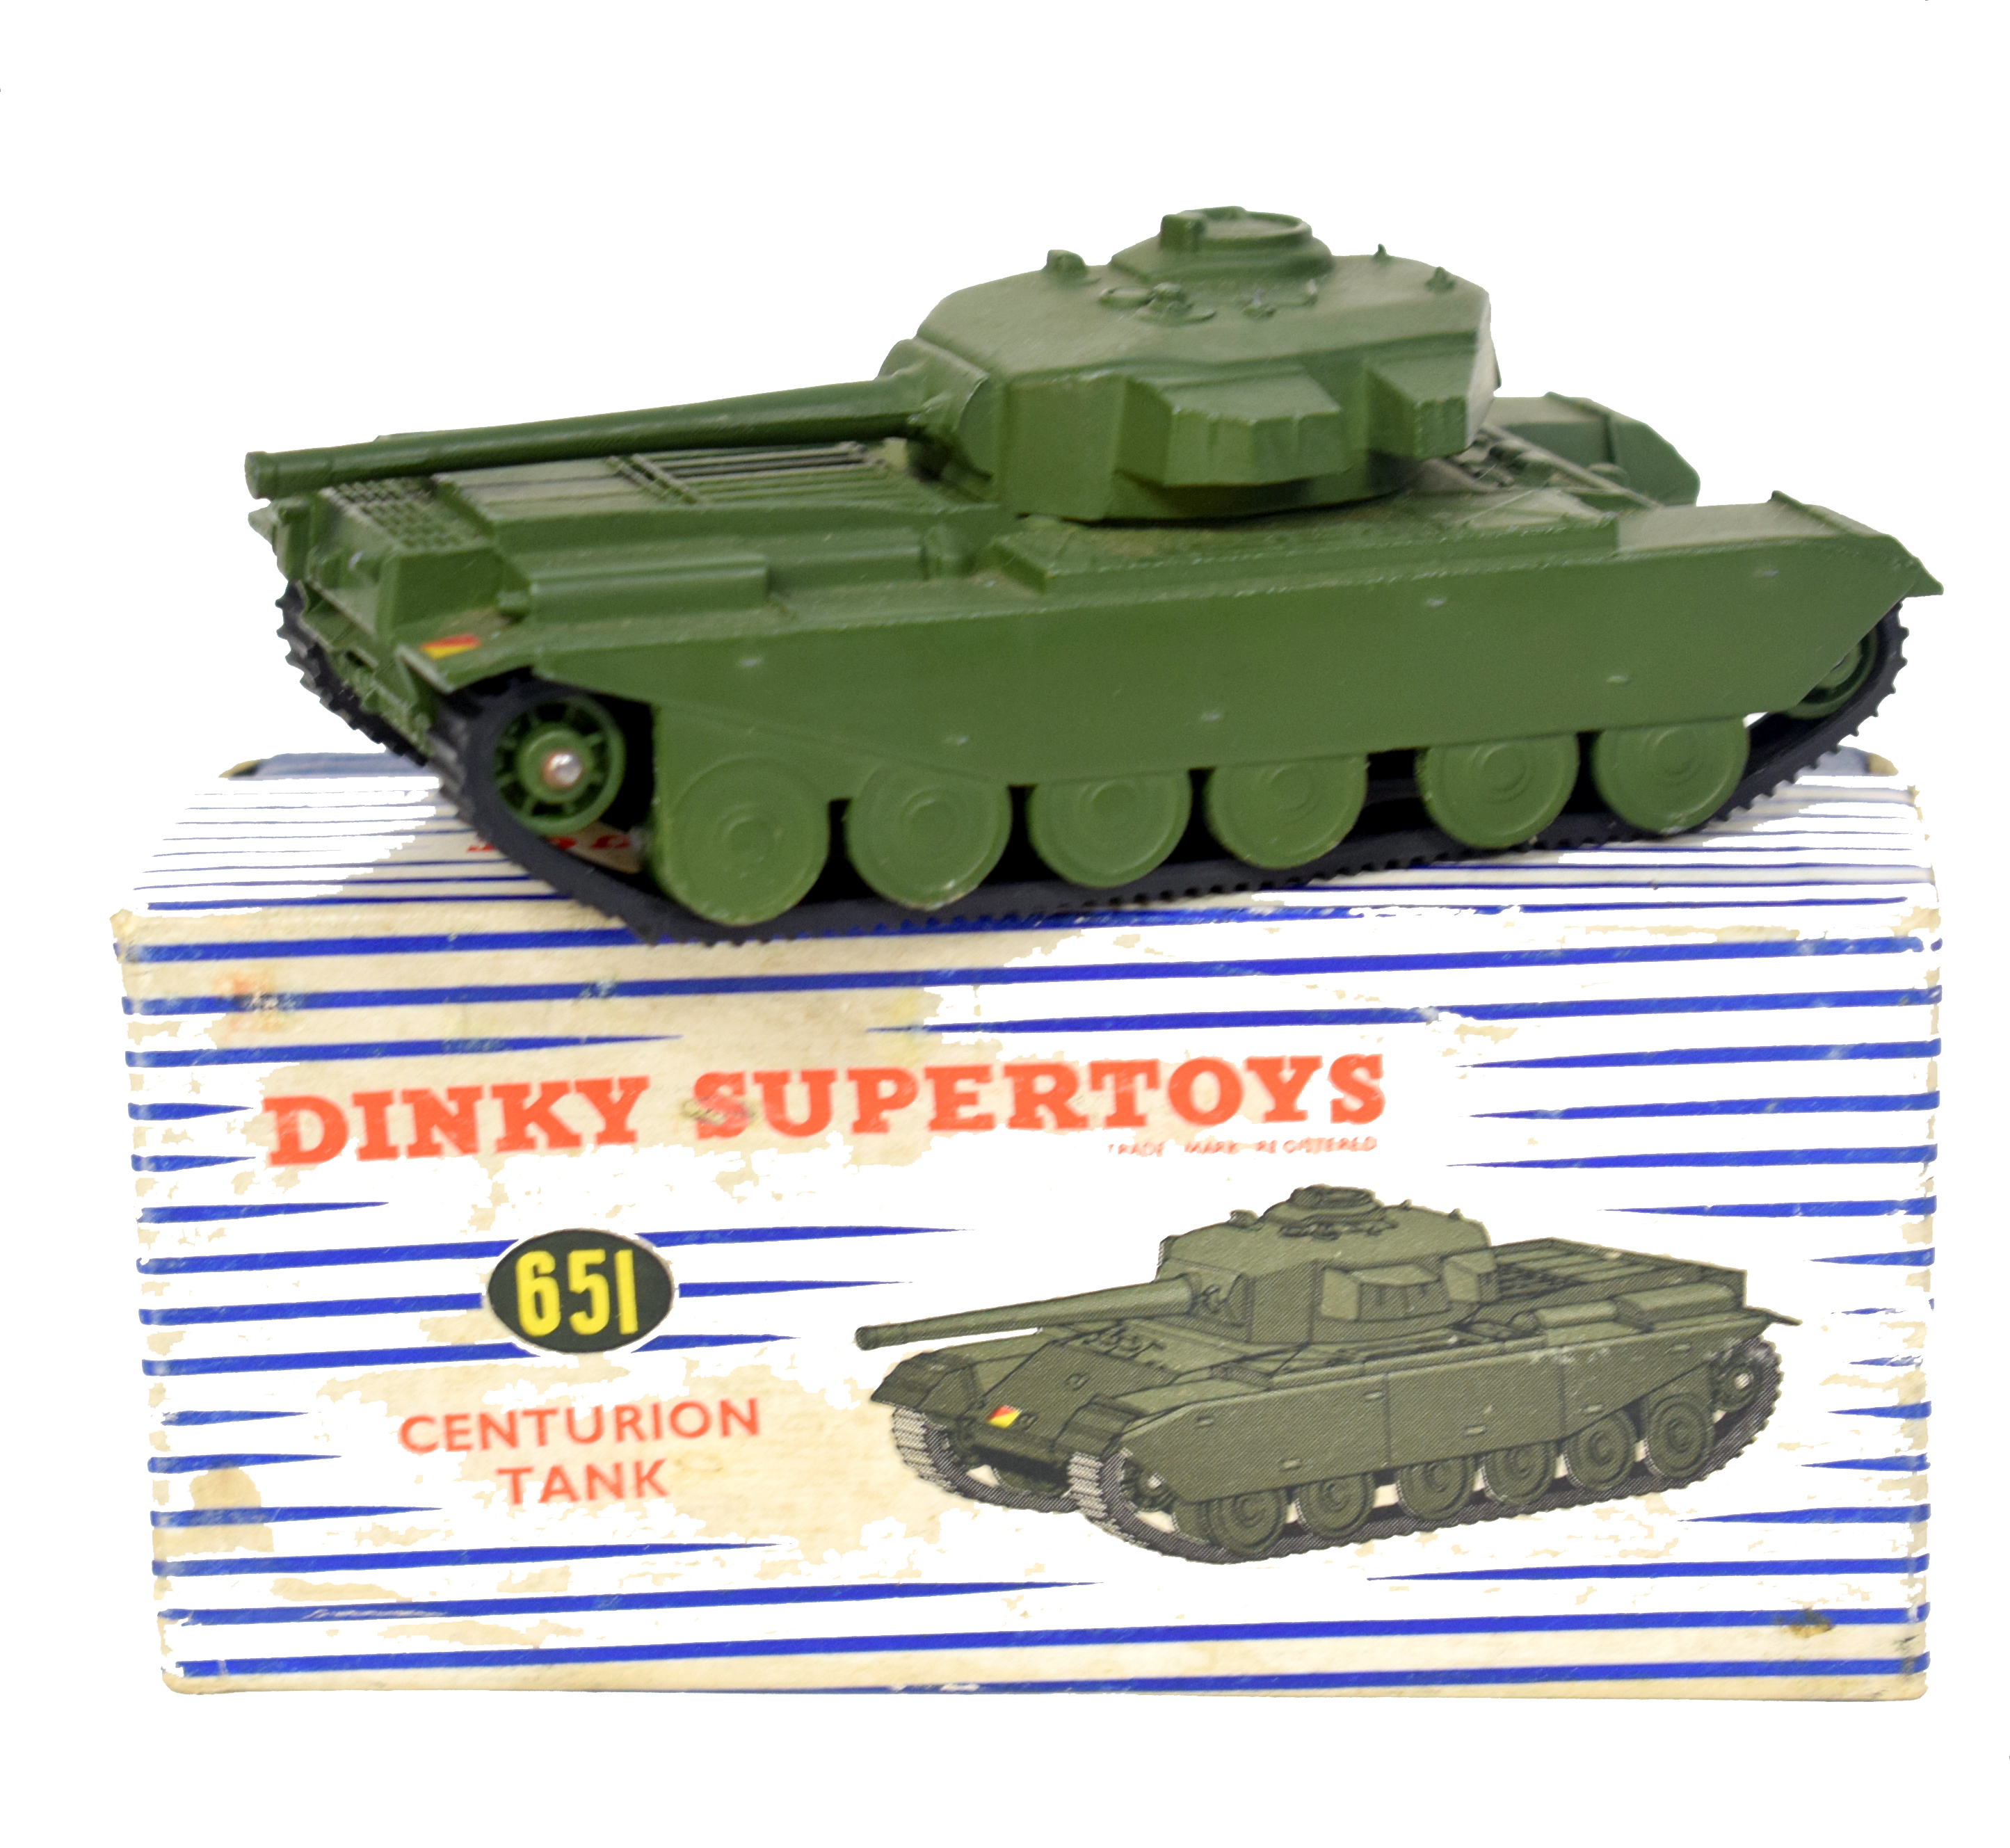 Dinky Centurion tank model no 651, in original box